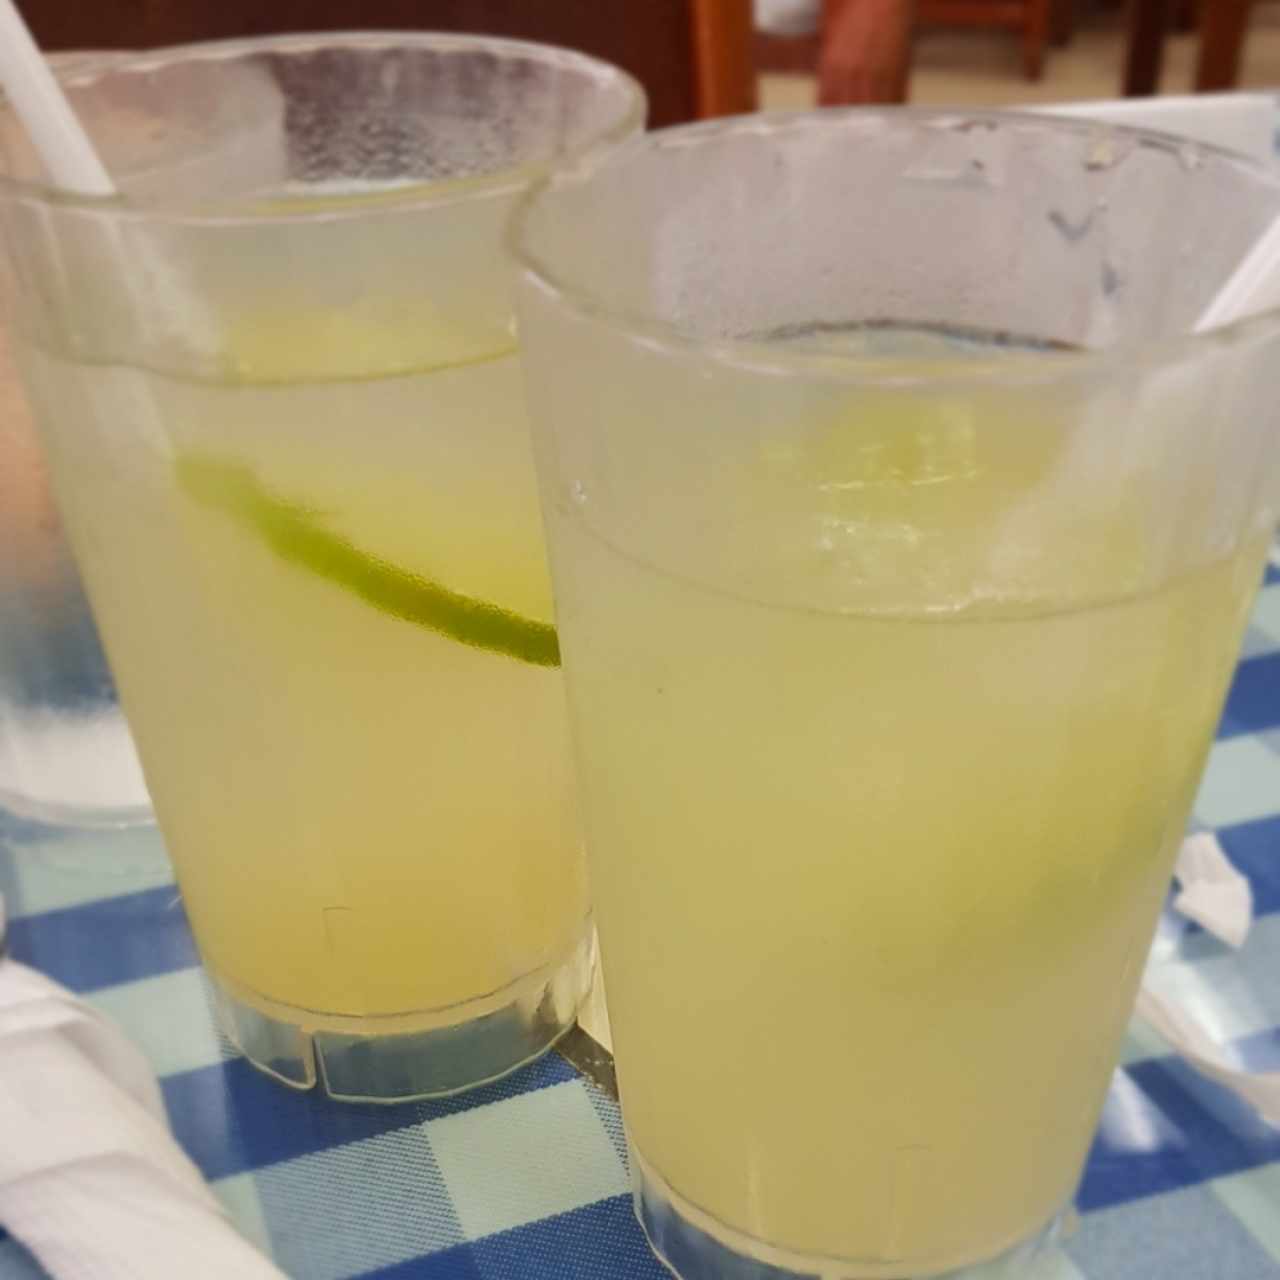 Limonada natural $1.50